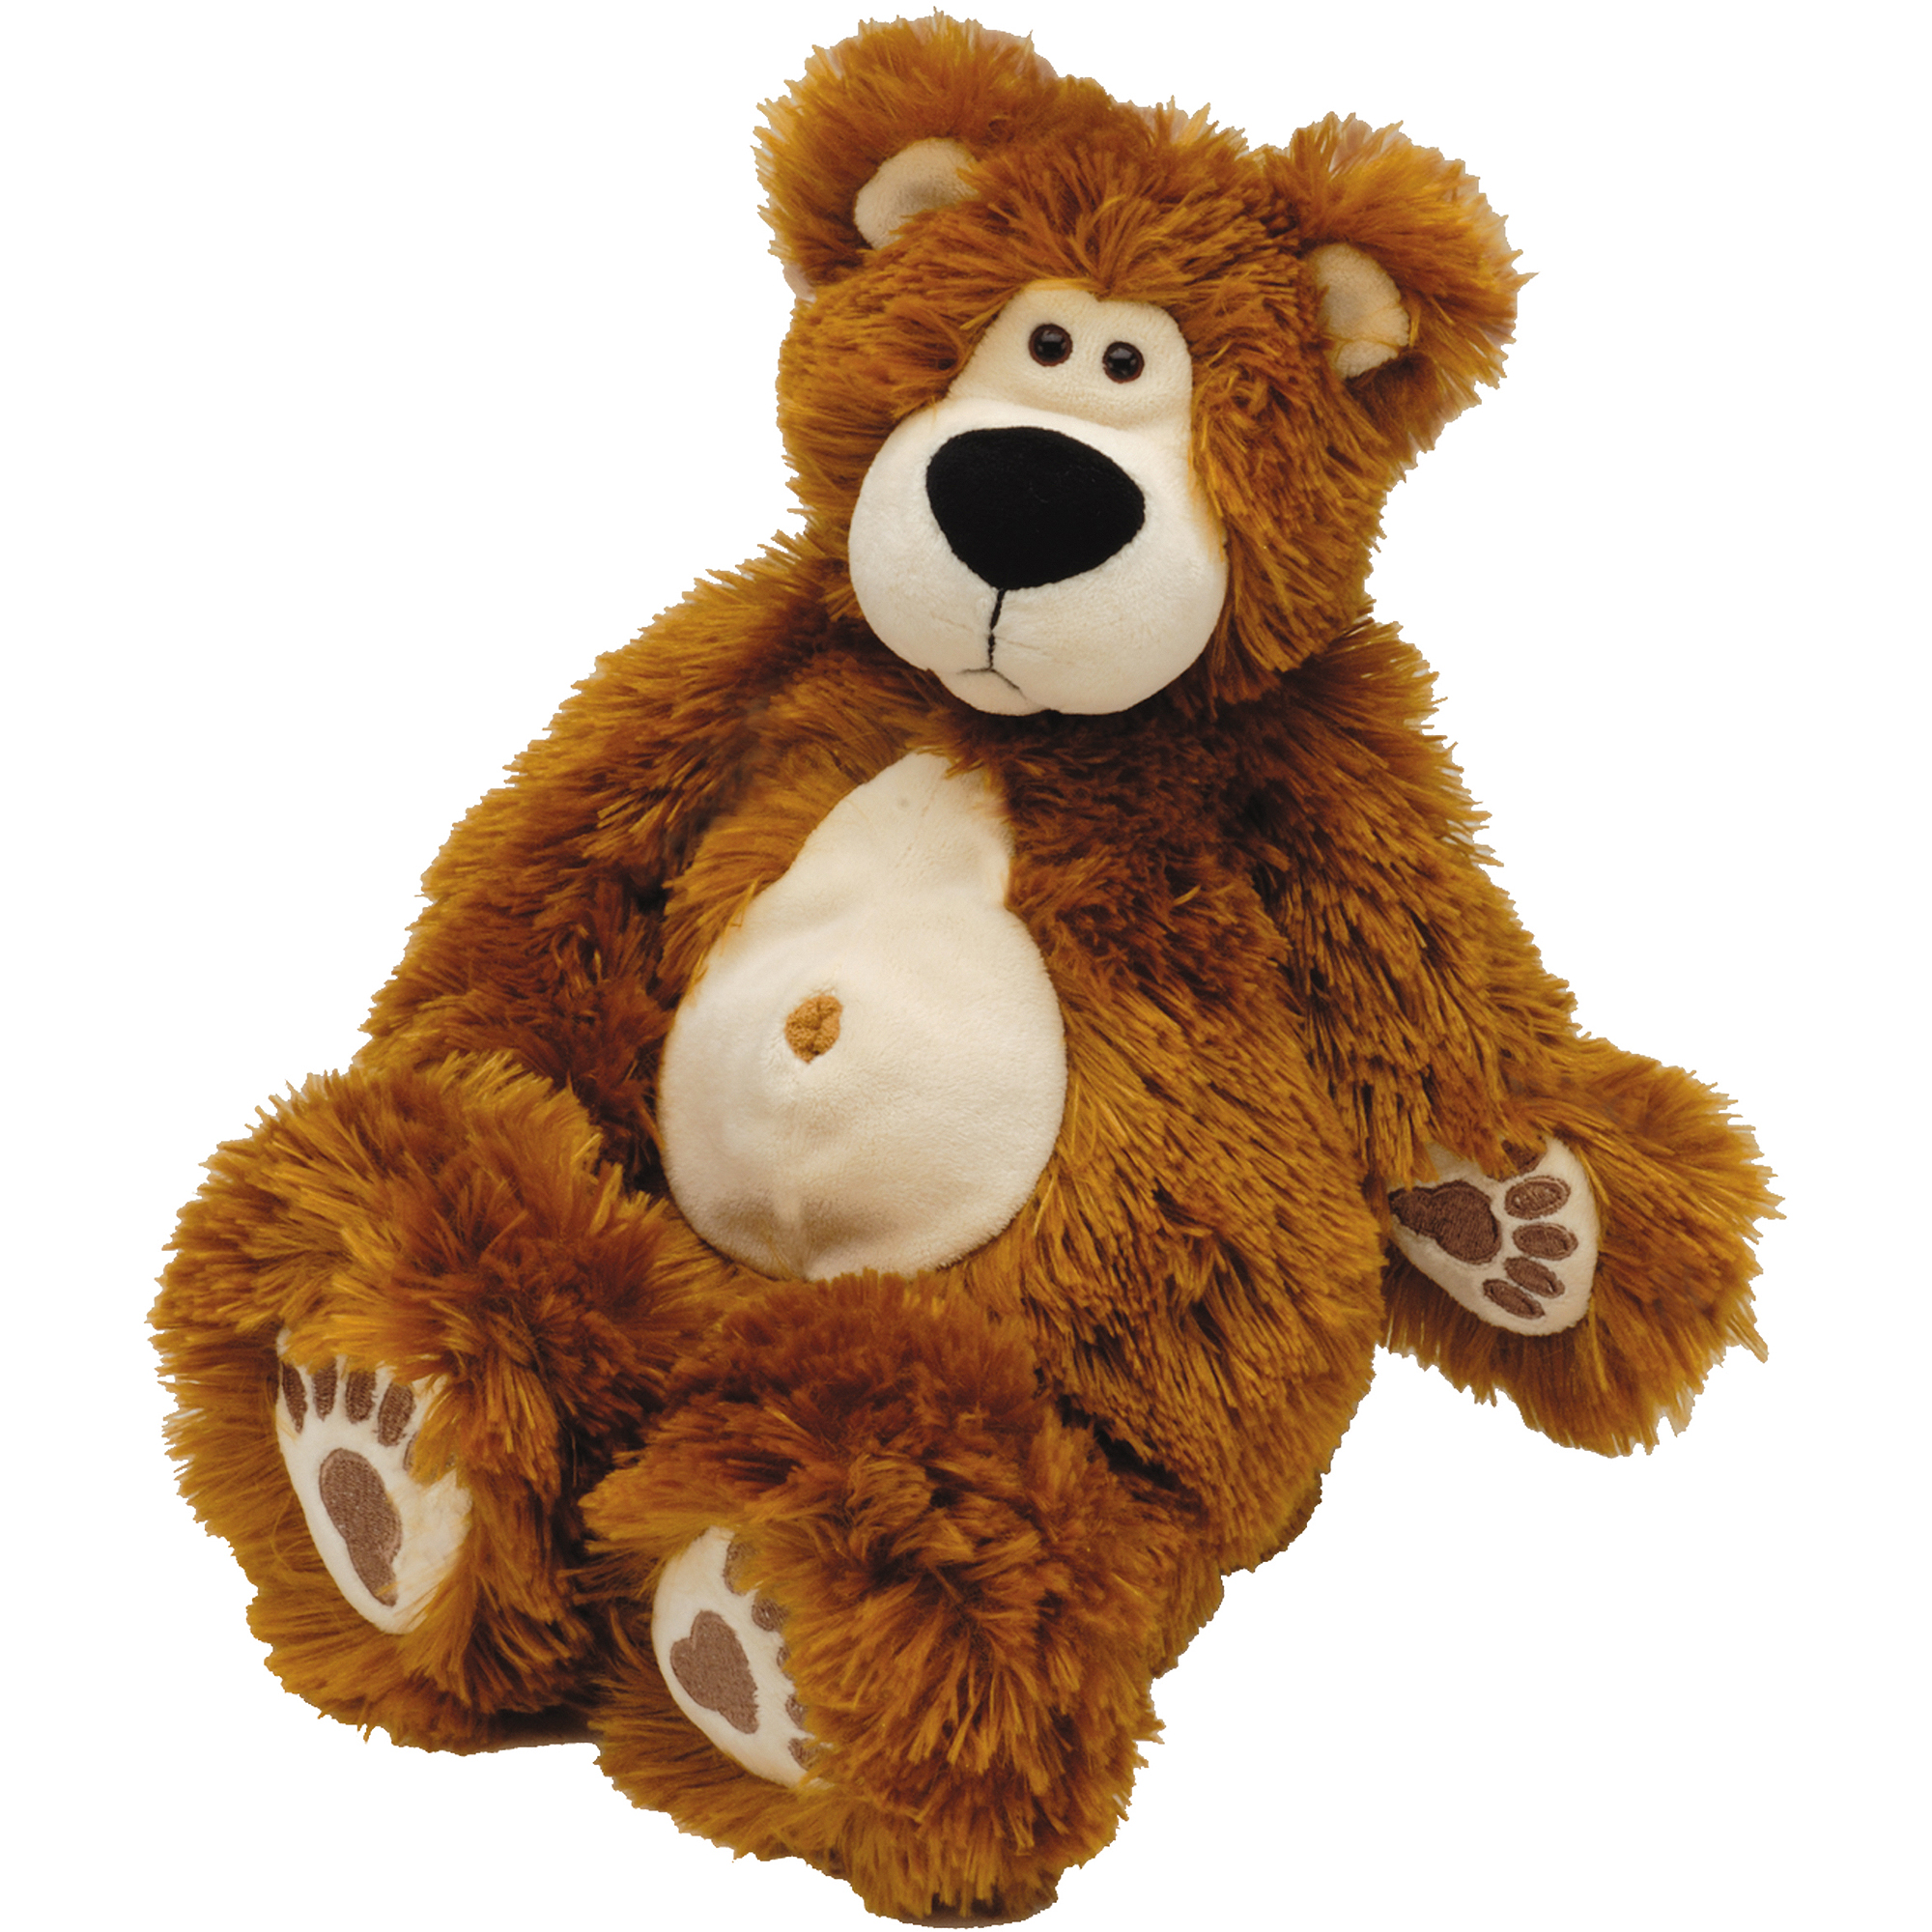 55 Inch Giant Teddy Bear Love Heart on Chest, Tan Soft New Big Plush ...